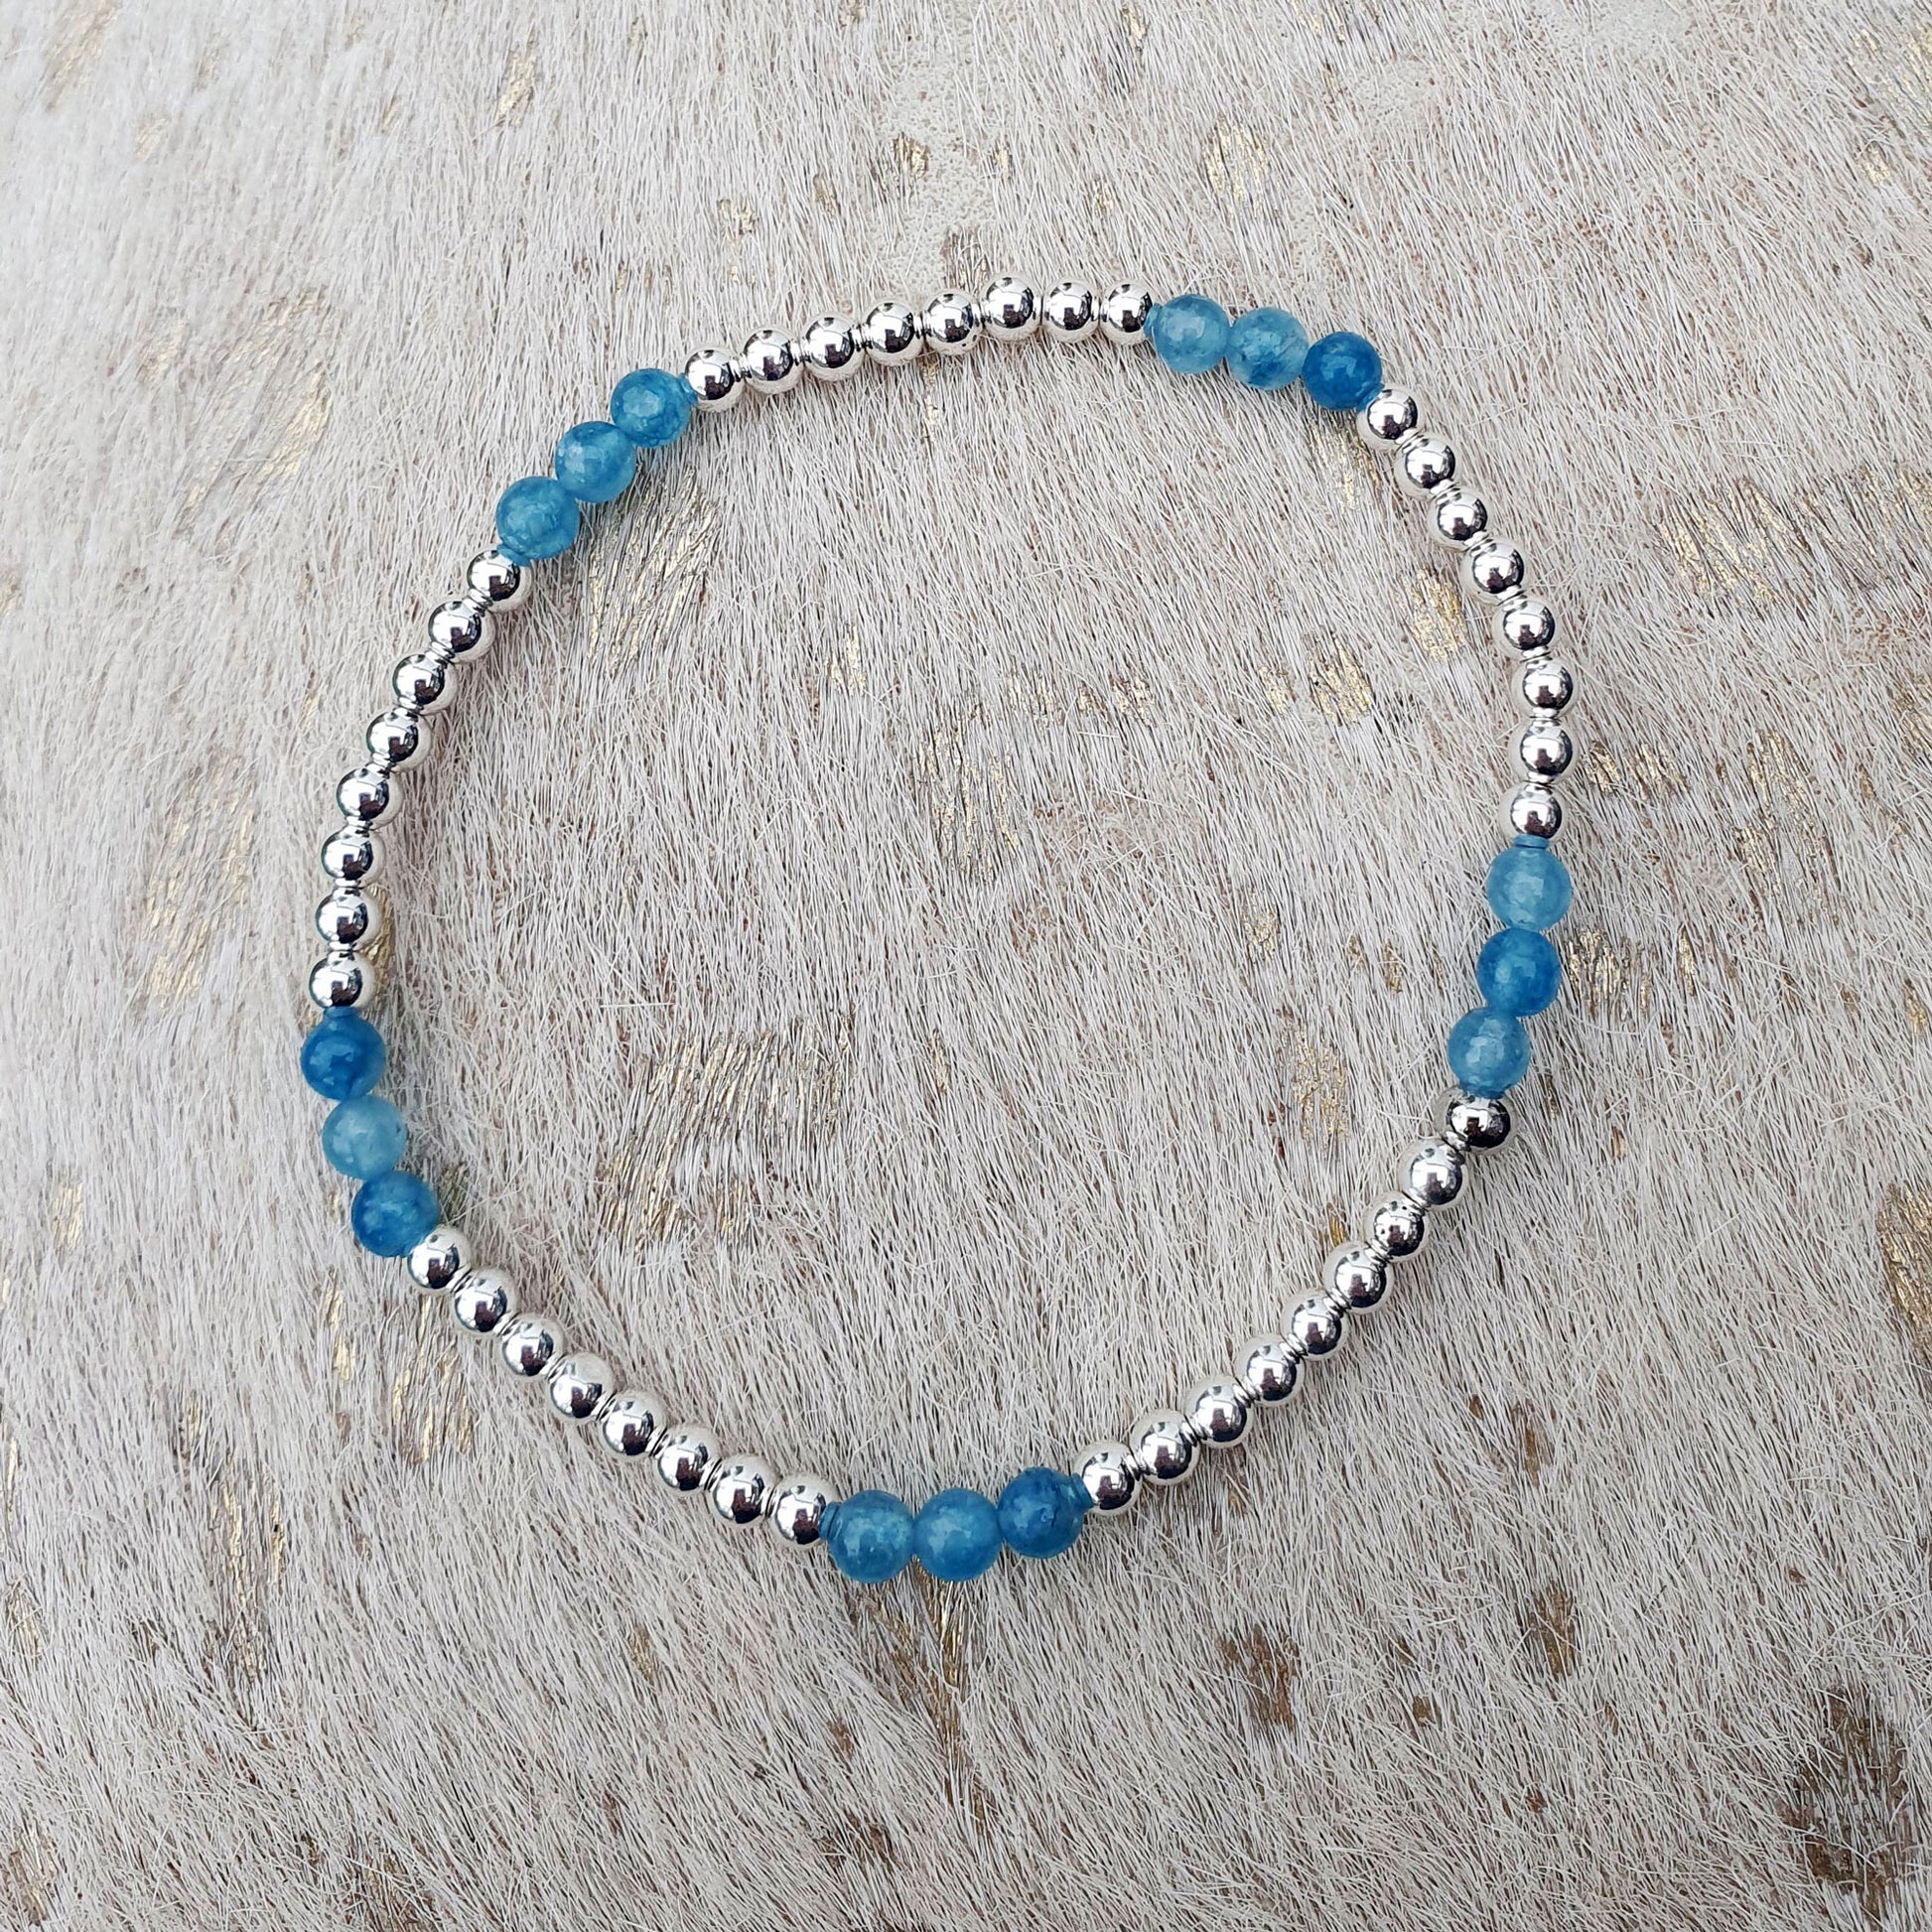 Blue agate inset bracelet